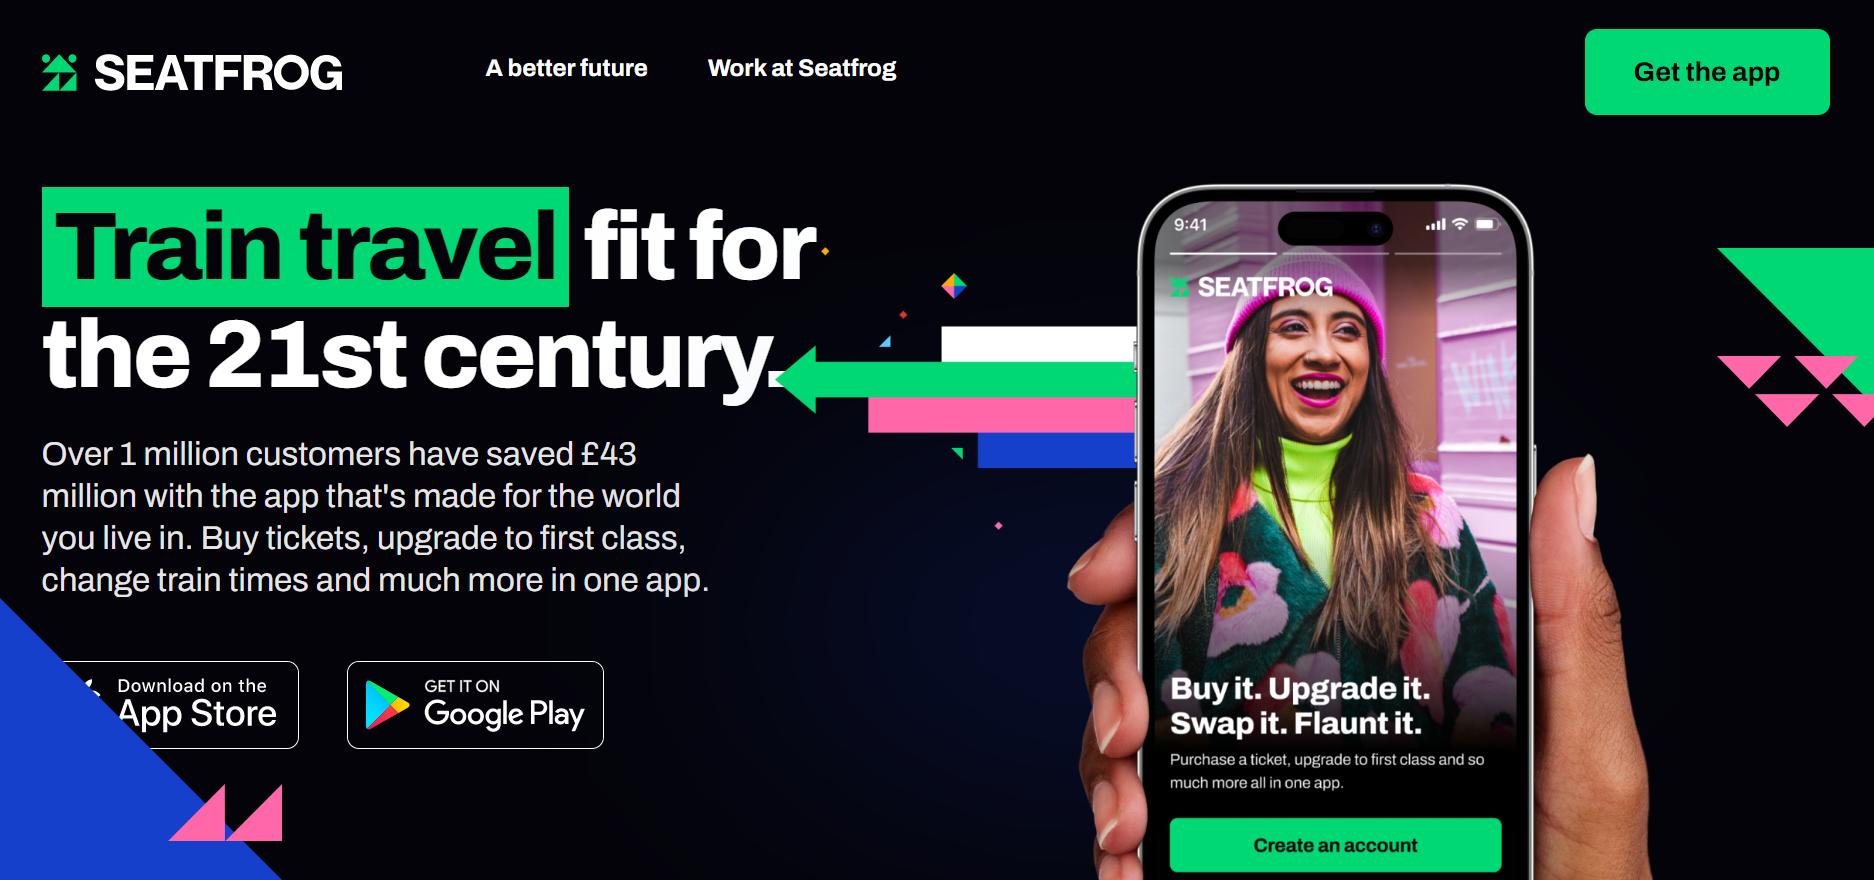 Seatfrog raises $7.5M to revolutionize rail travel experience with app